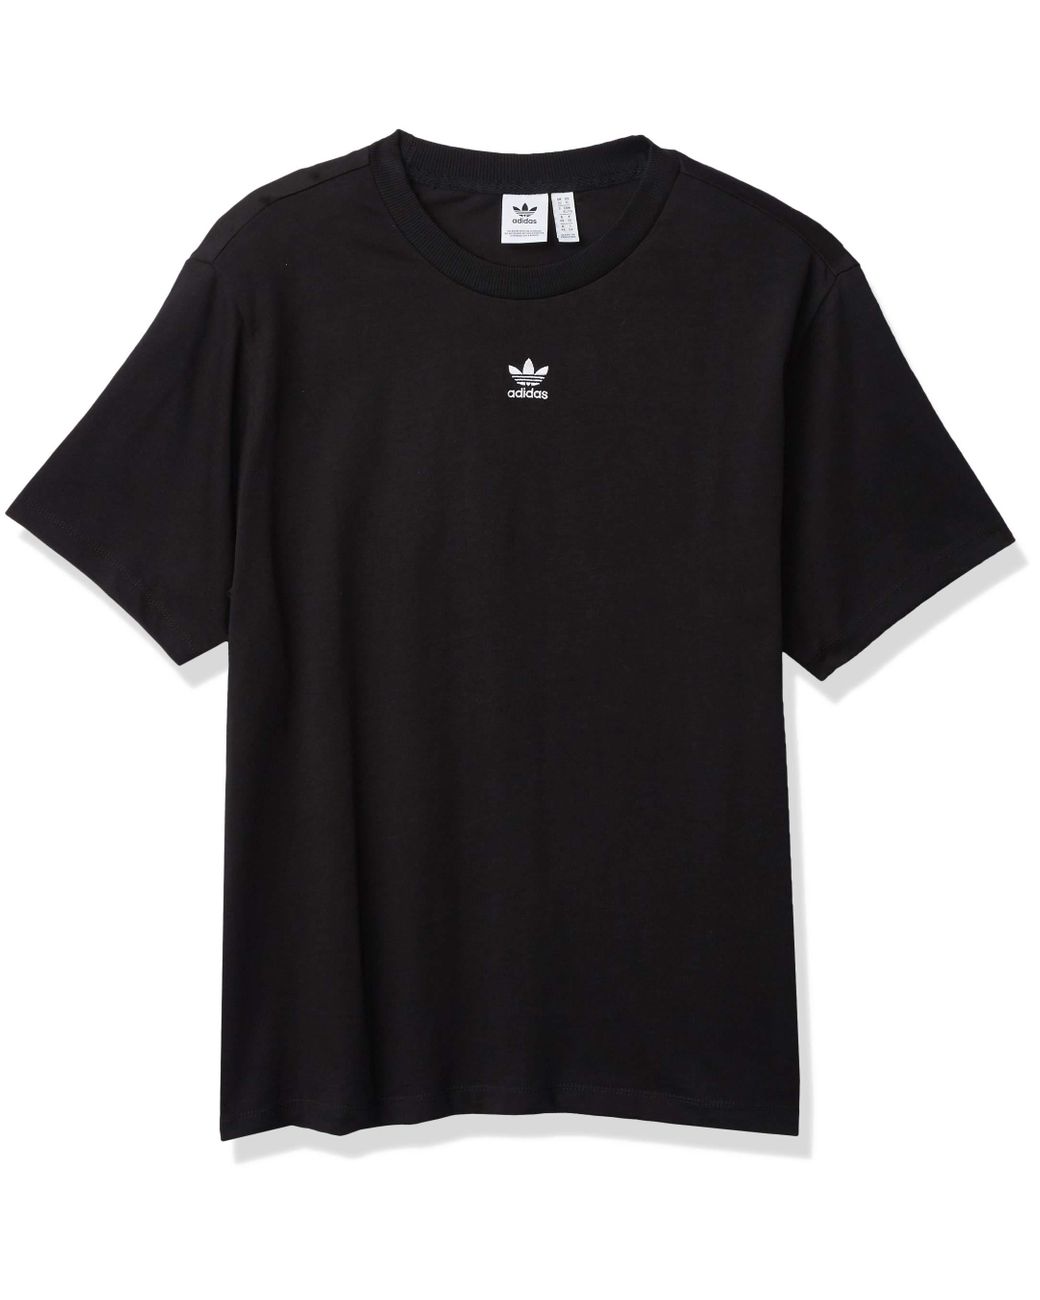 adidas Originals T-shirt in Black - Lyst